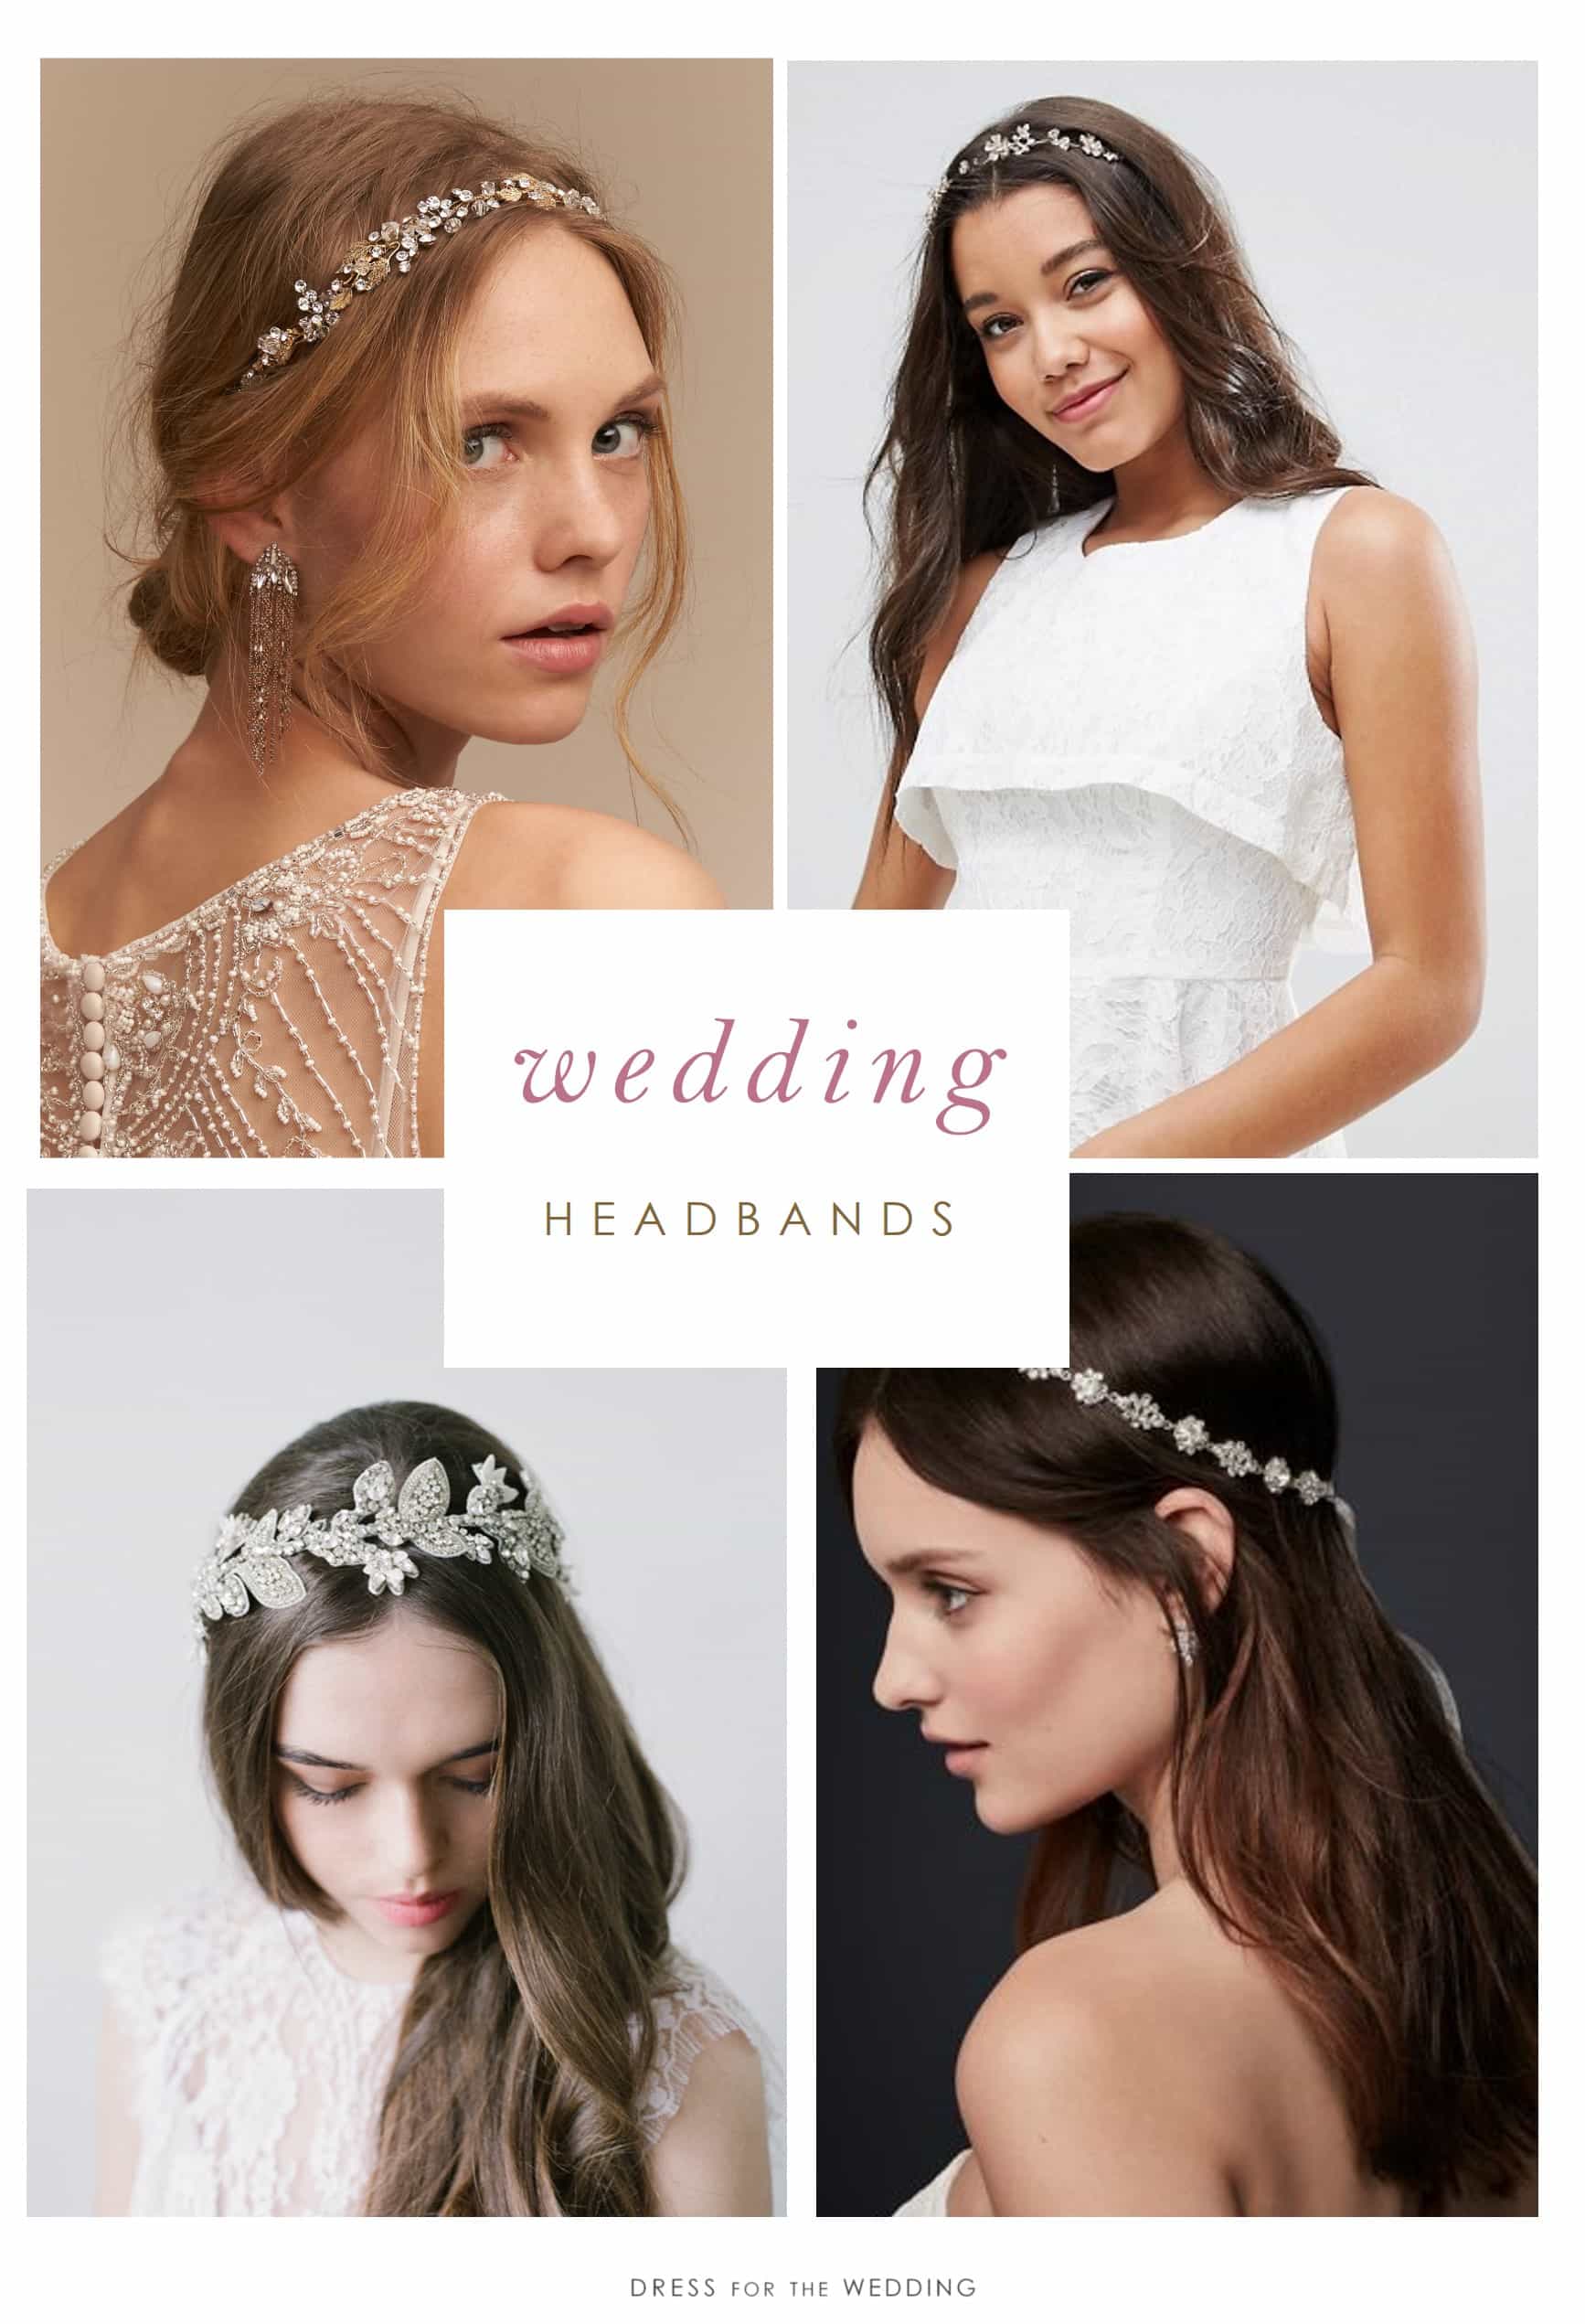 https://www.dressforthewedding.com/wp-content/uploads/2017/08/Wedding-Headbands.jpg